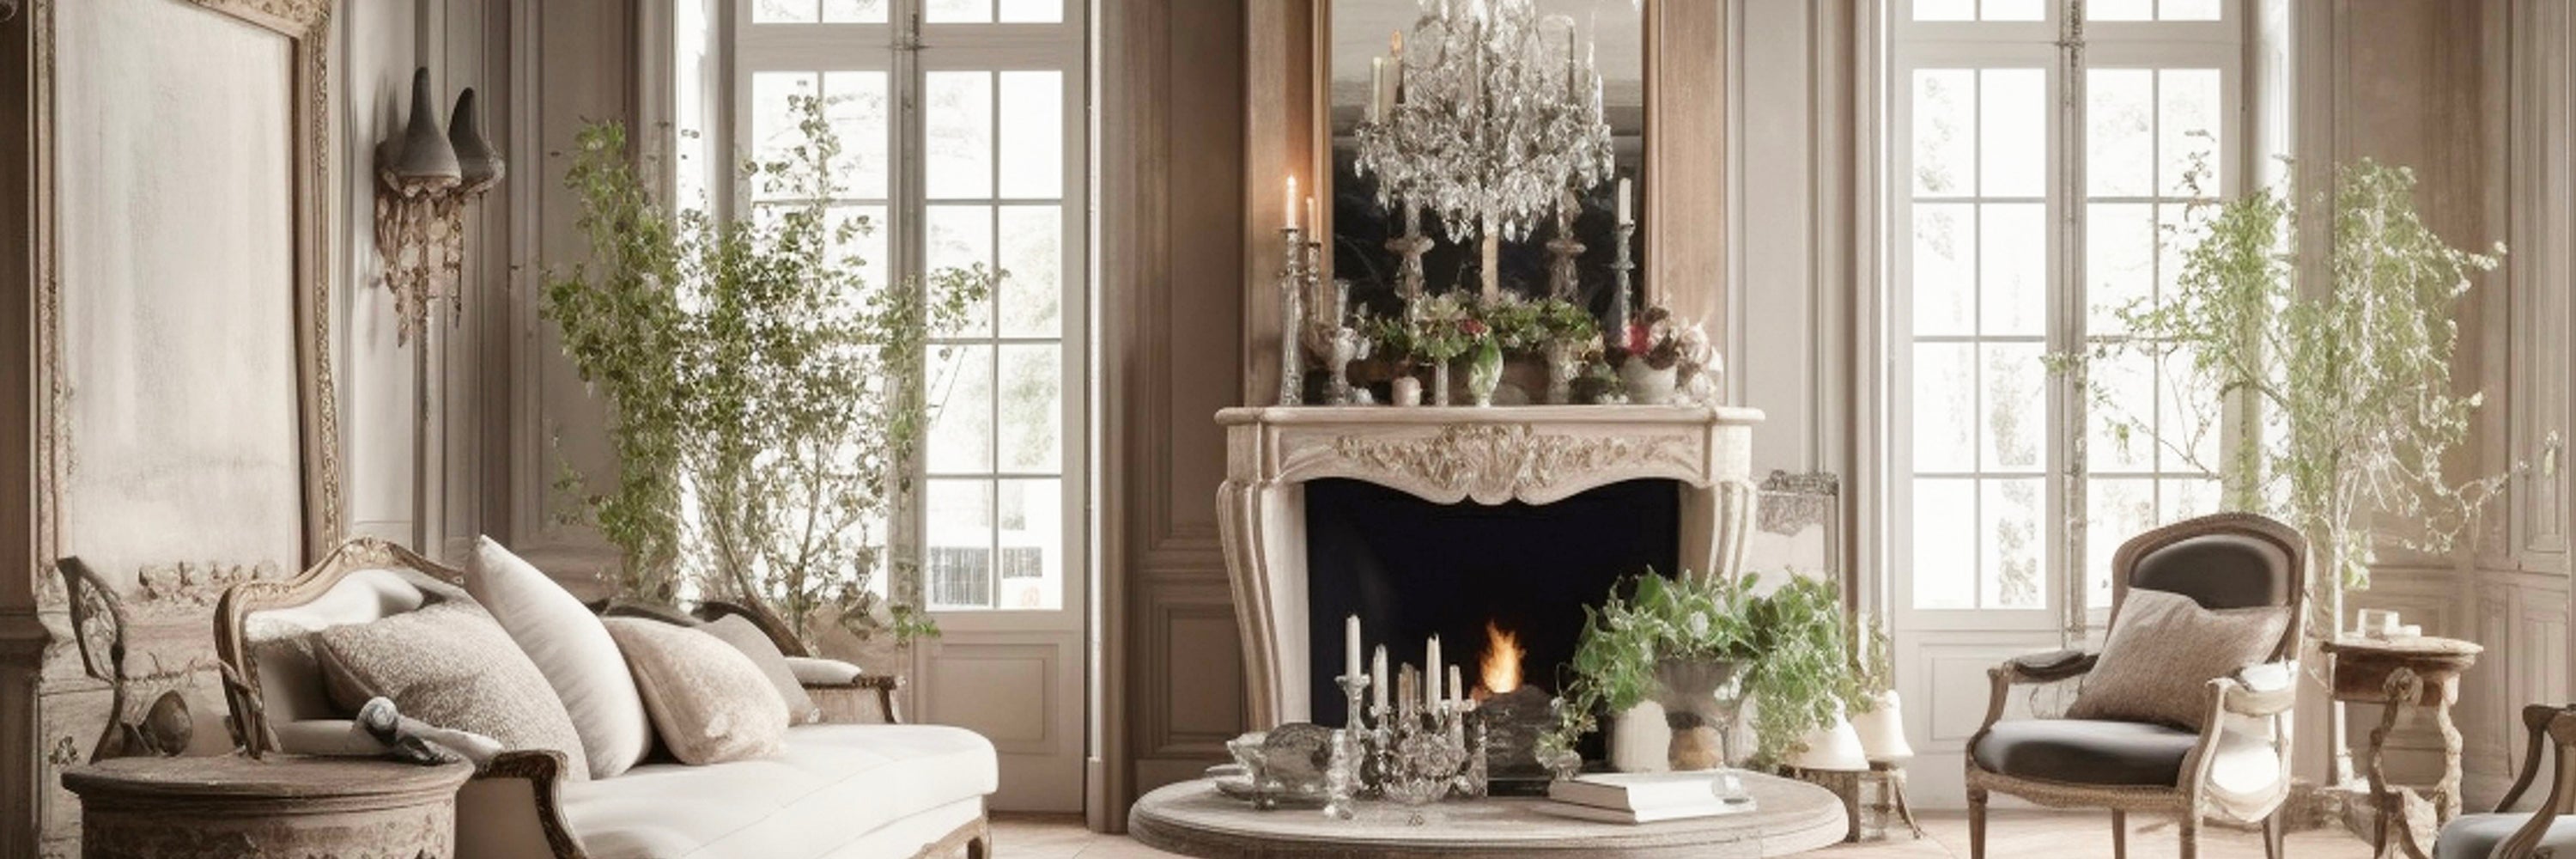 Beautiful French Style Furniture